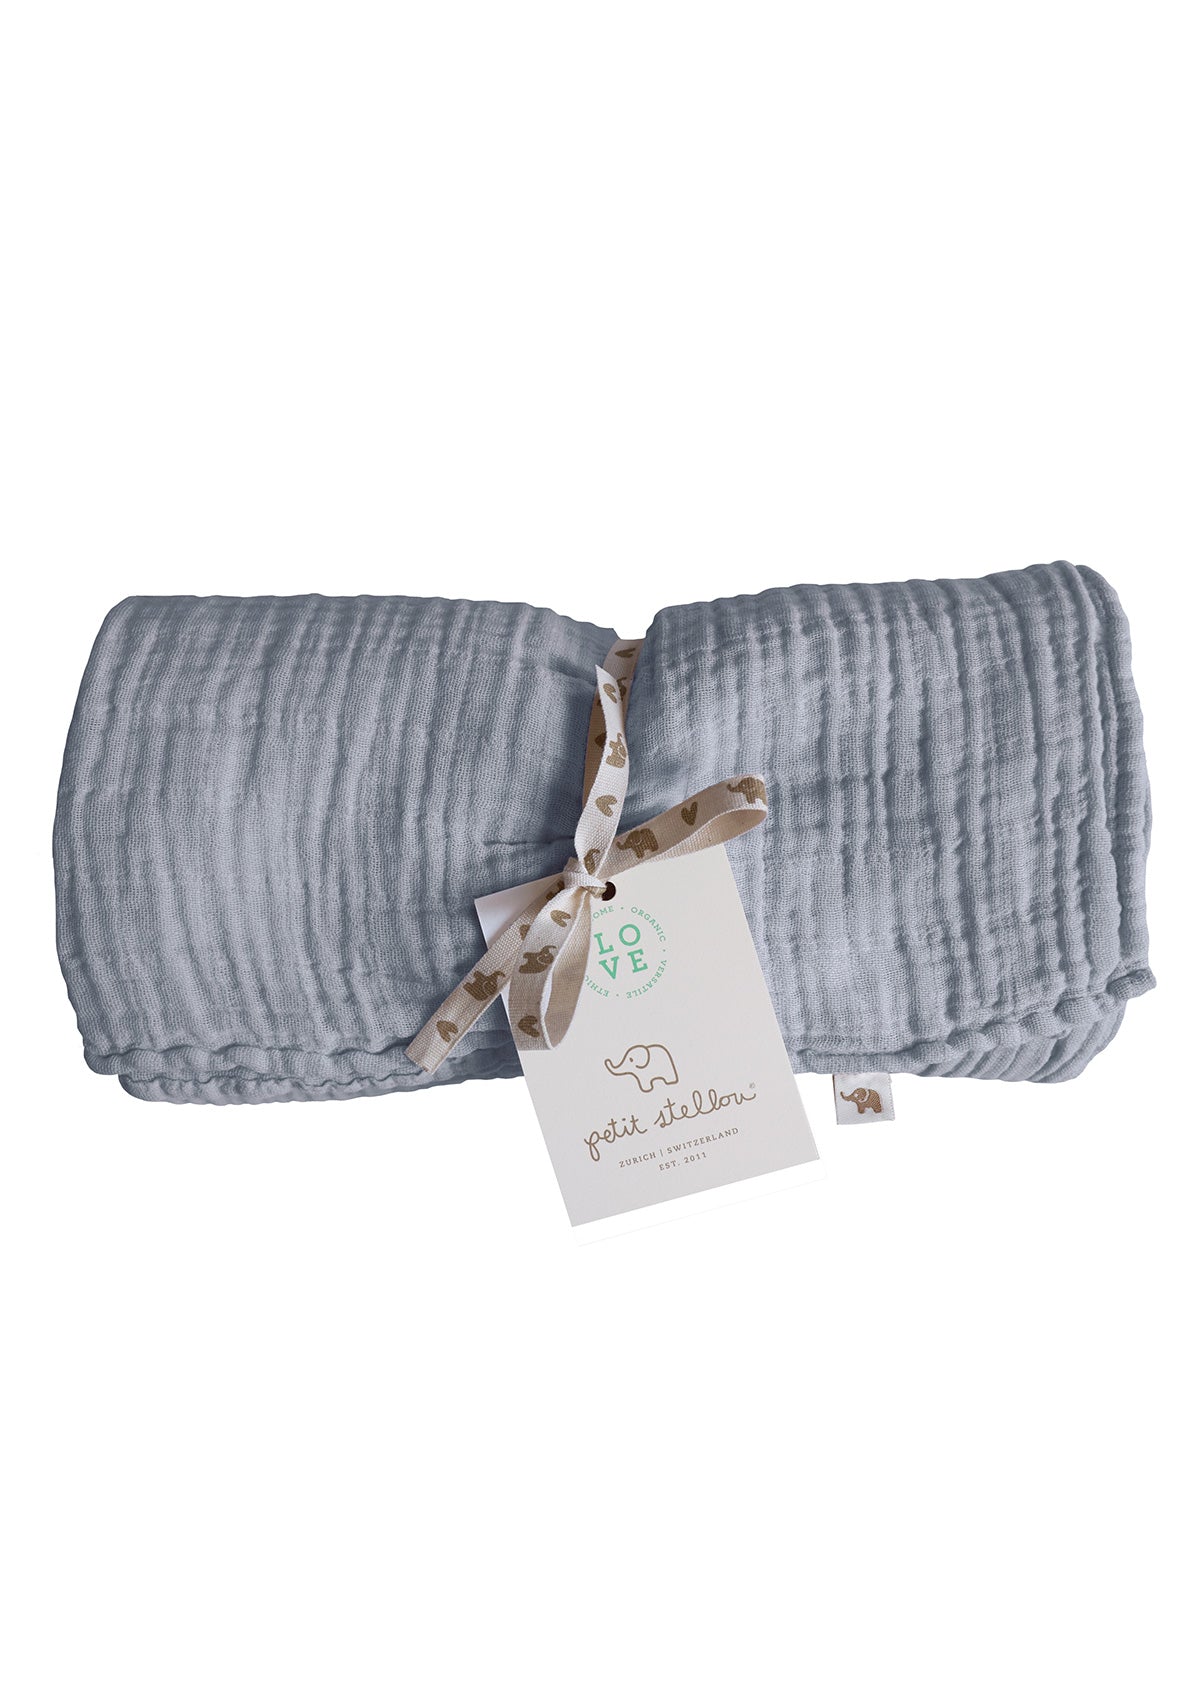 Grosse Baumwolldecke aus Musselinstoff für die ganze FamilieNOOSHI Blanket Elephant blaugrau